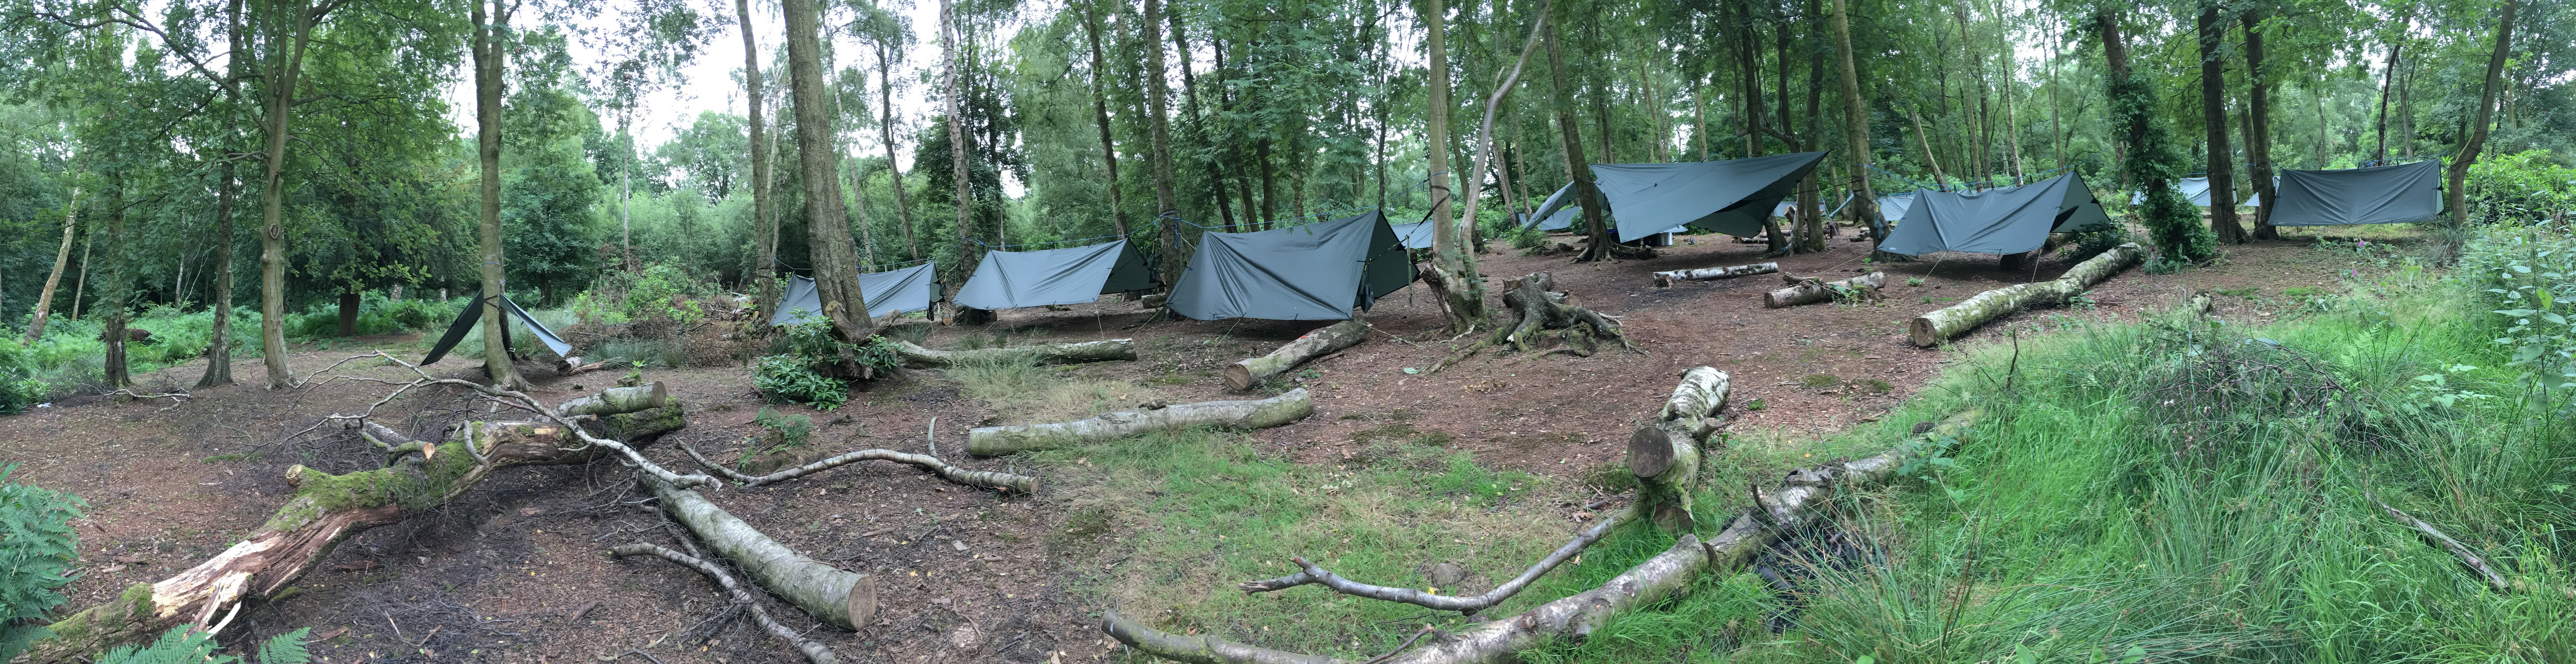 camp site hammock shelter tent